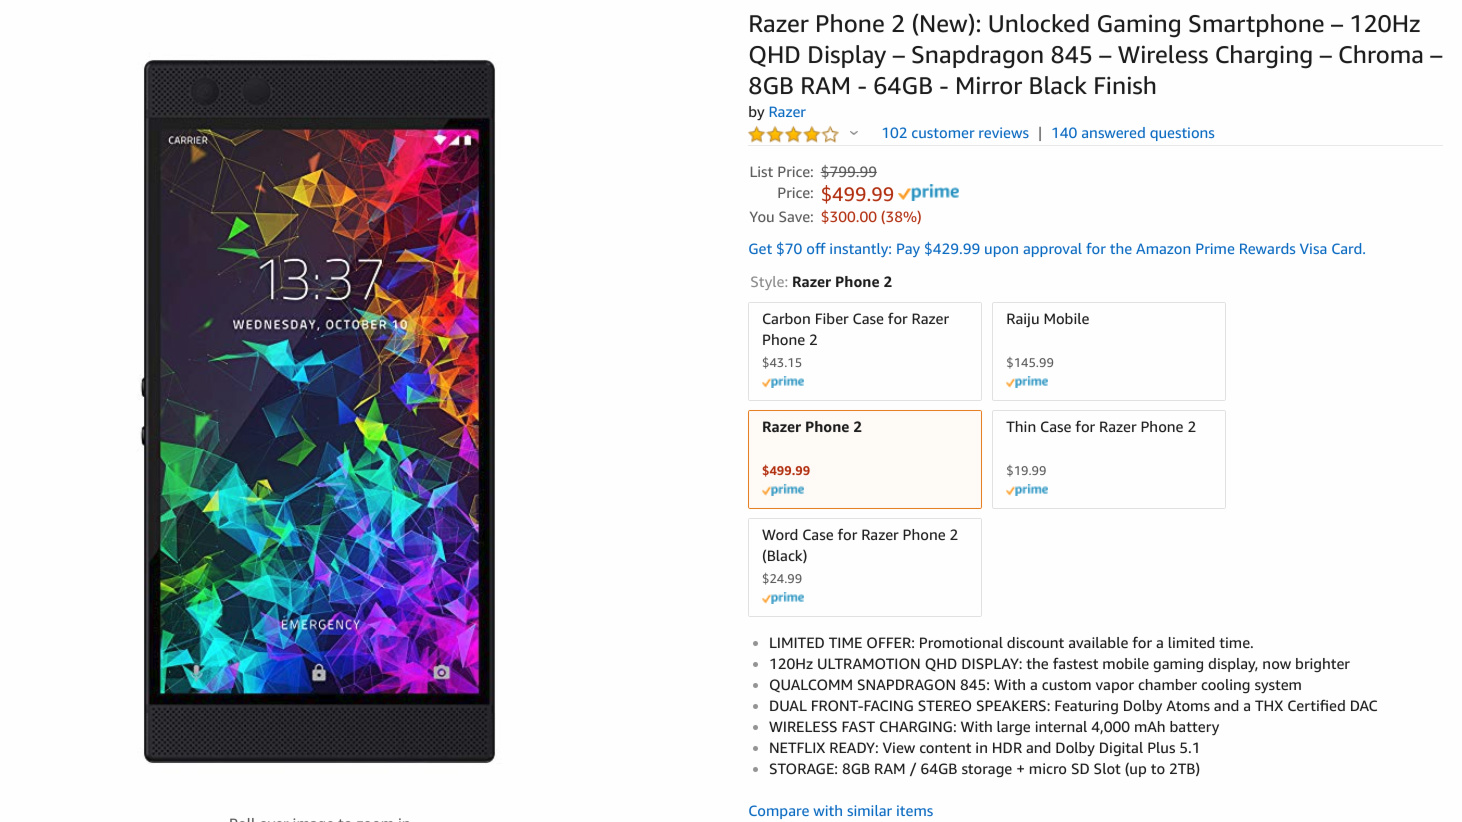 Deal on the Razer Phone 2 on Amazon.